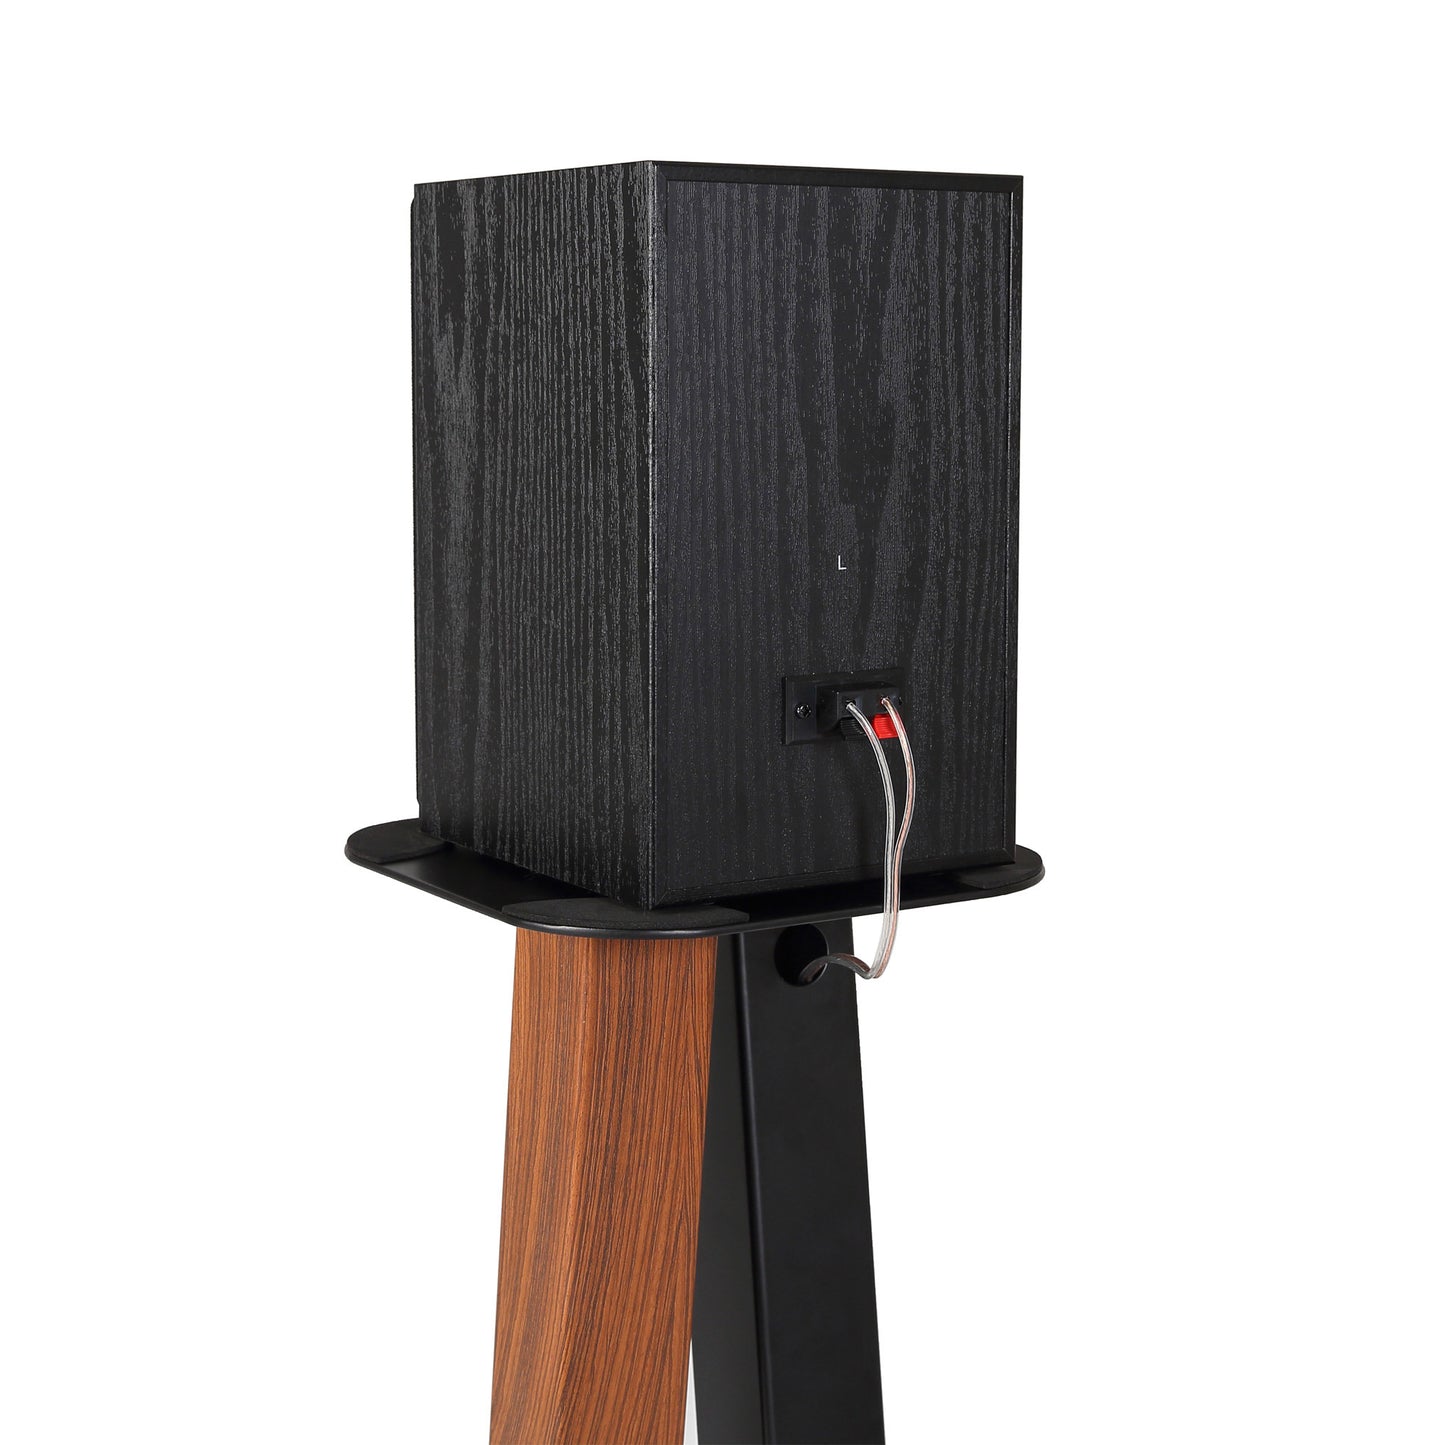 EXIMUS One Pair Fixed Height Universal Speaker Floor Stands - Cedar Black (600 Series)